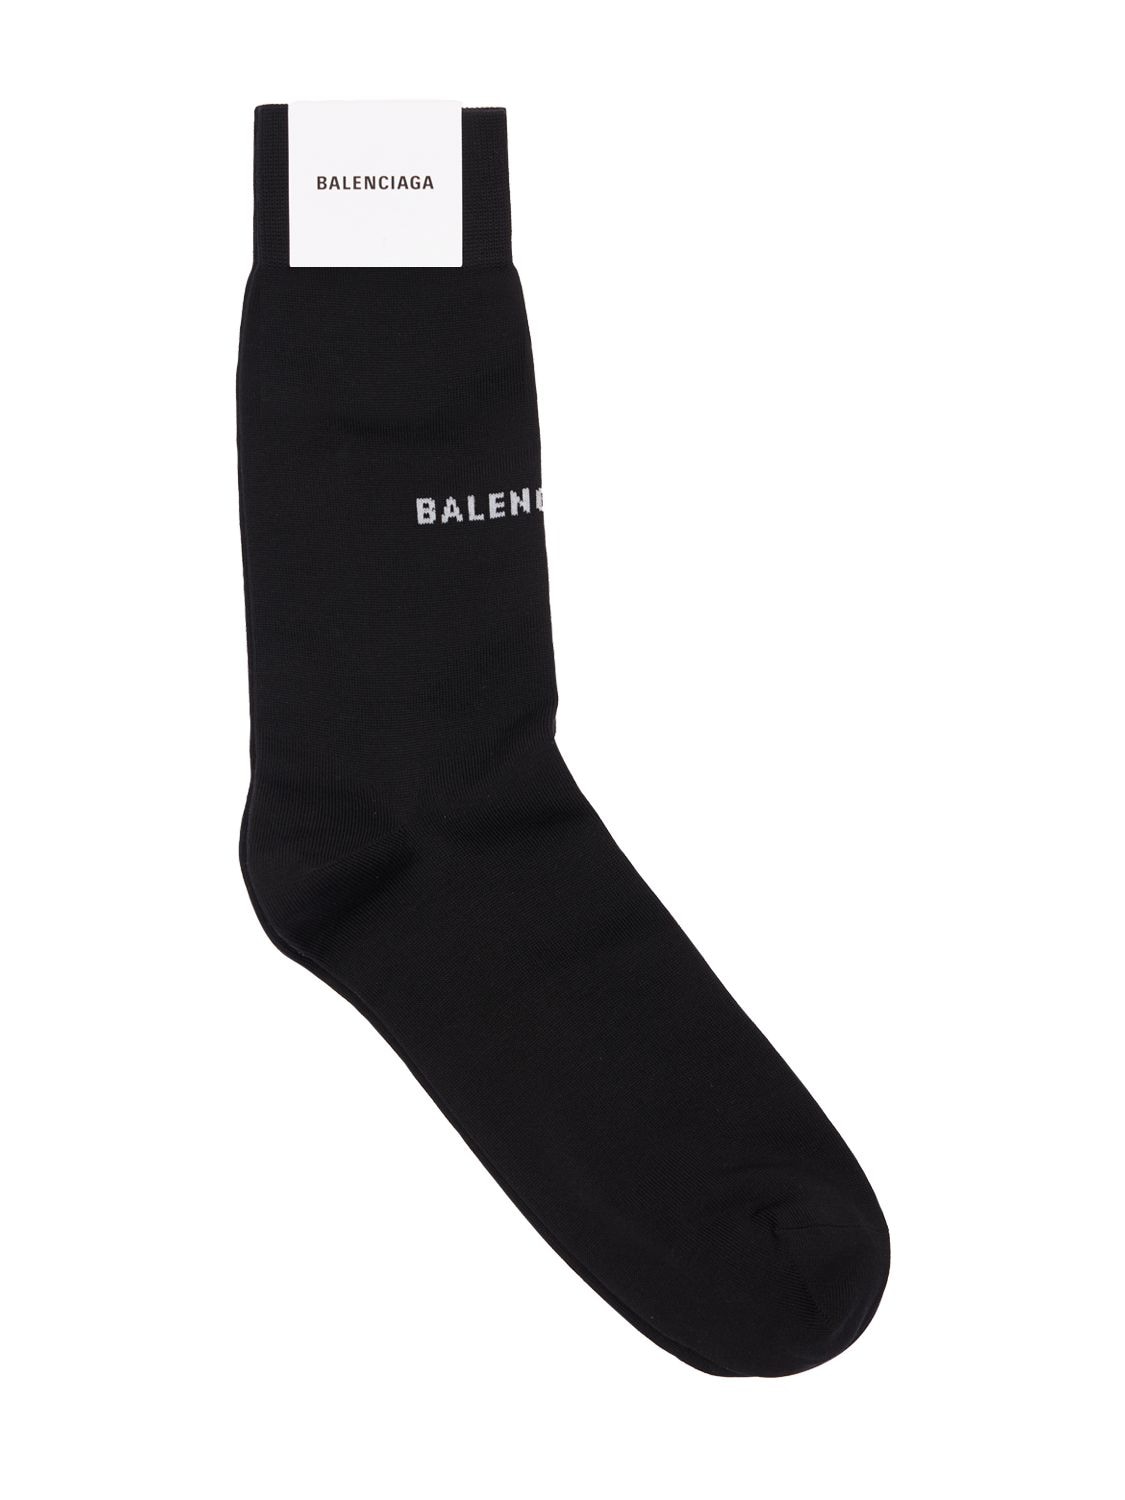 Balenciaga - Classic logo cotton blend socks - Black/White | Luisaviaroma